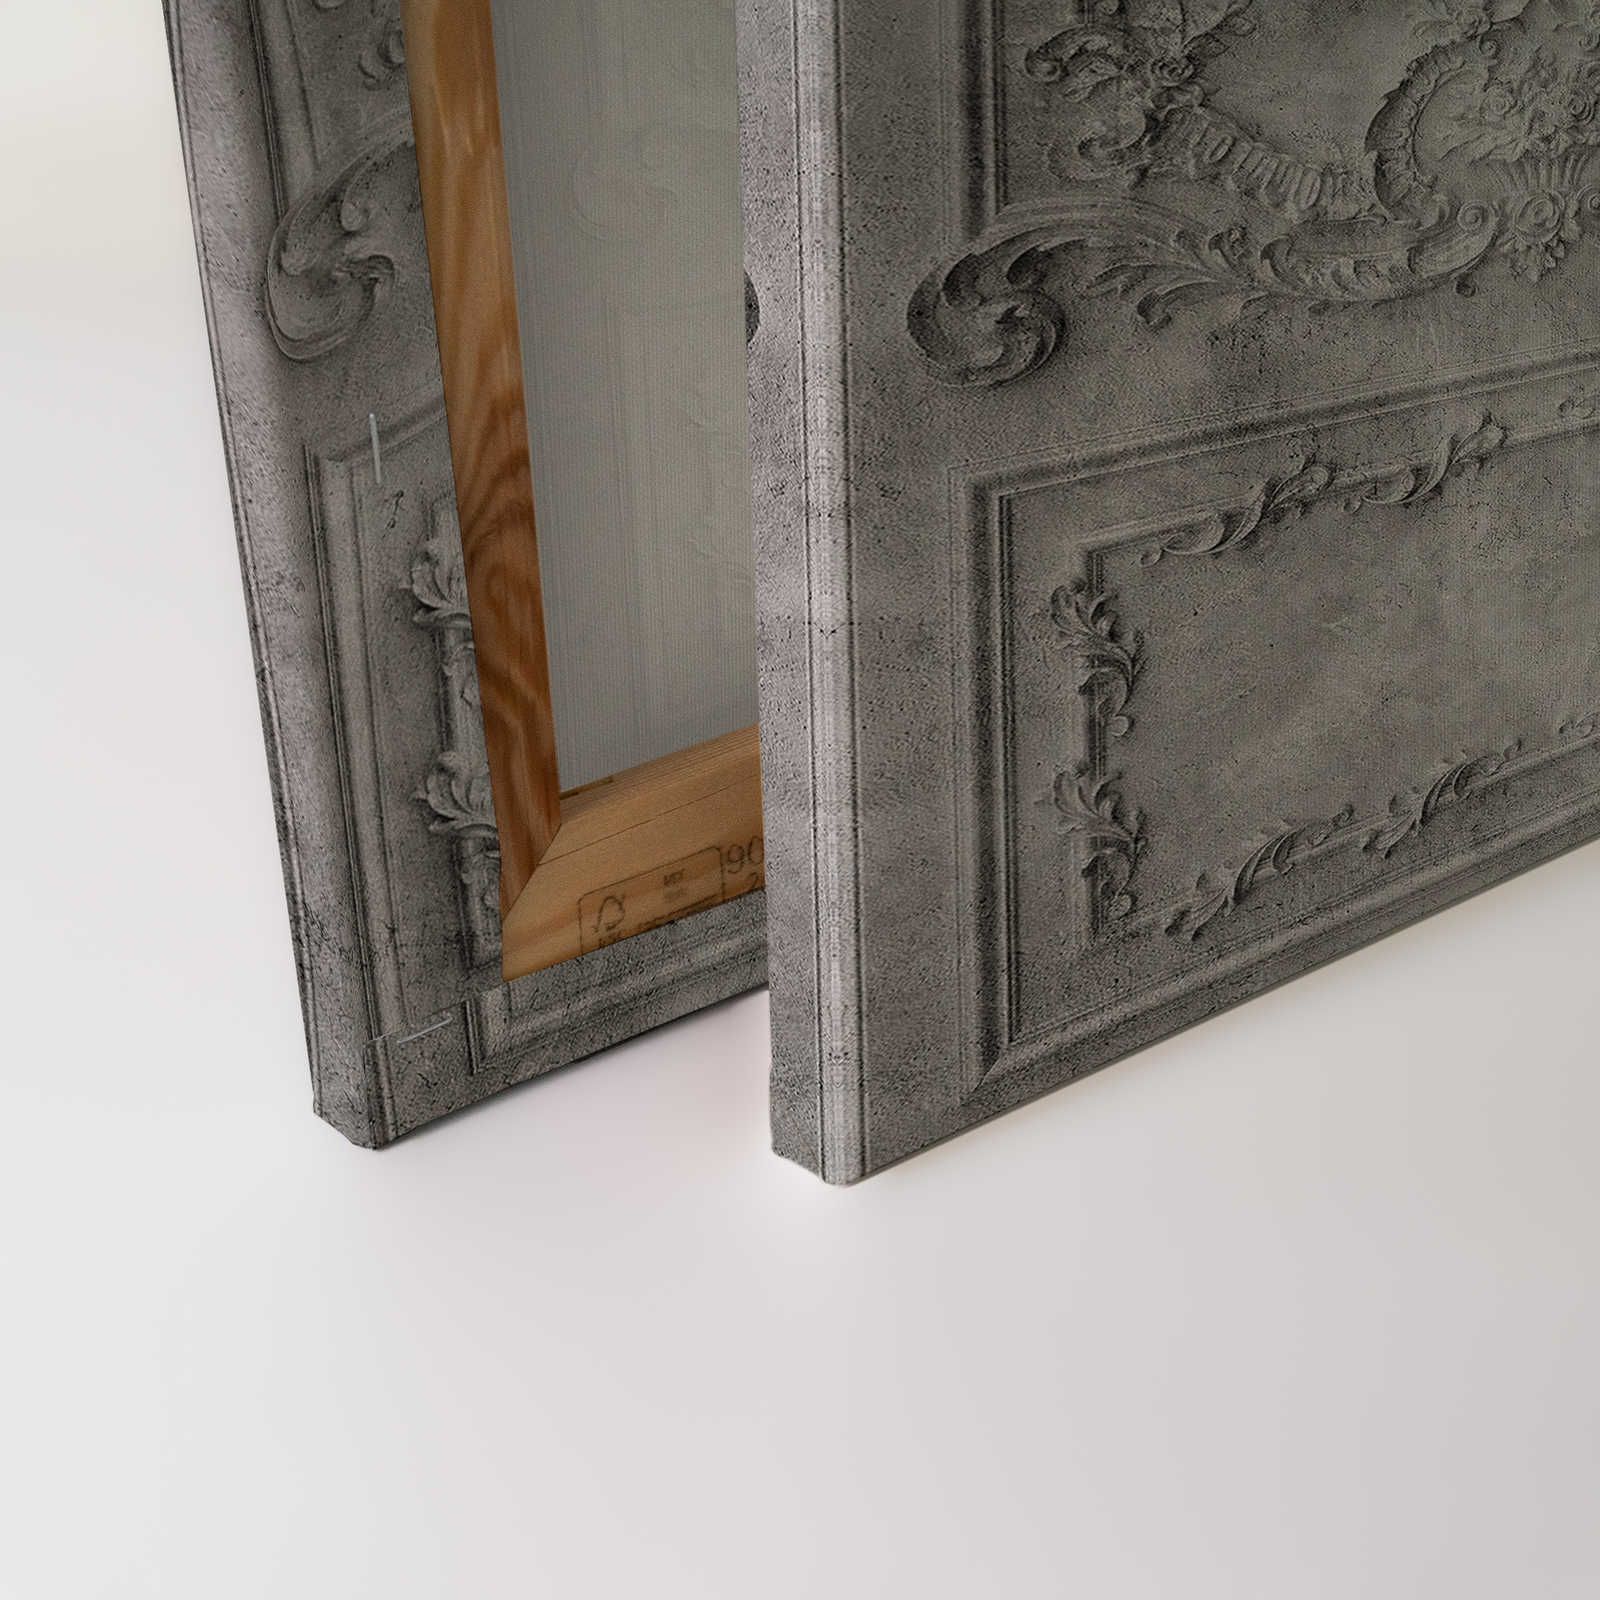             Versailles 2 - Leinwandbild Holz-Paneele Grau im Barock Stil – 0,90 m x 0,60 m
        